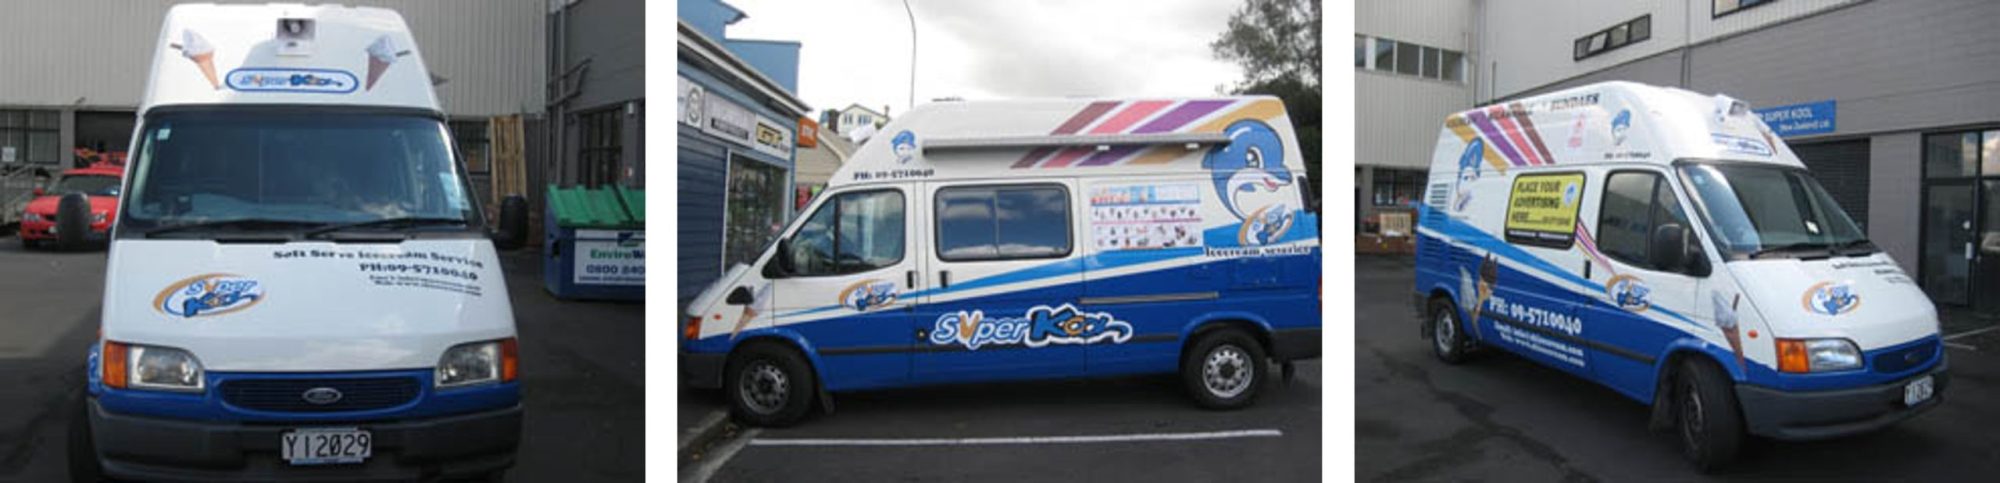 New Super Kool Van on road now